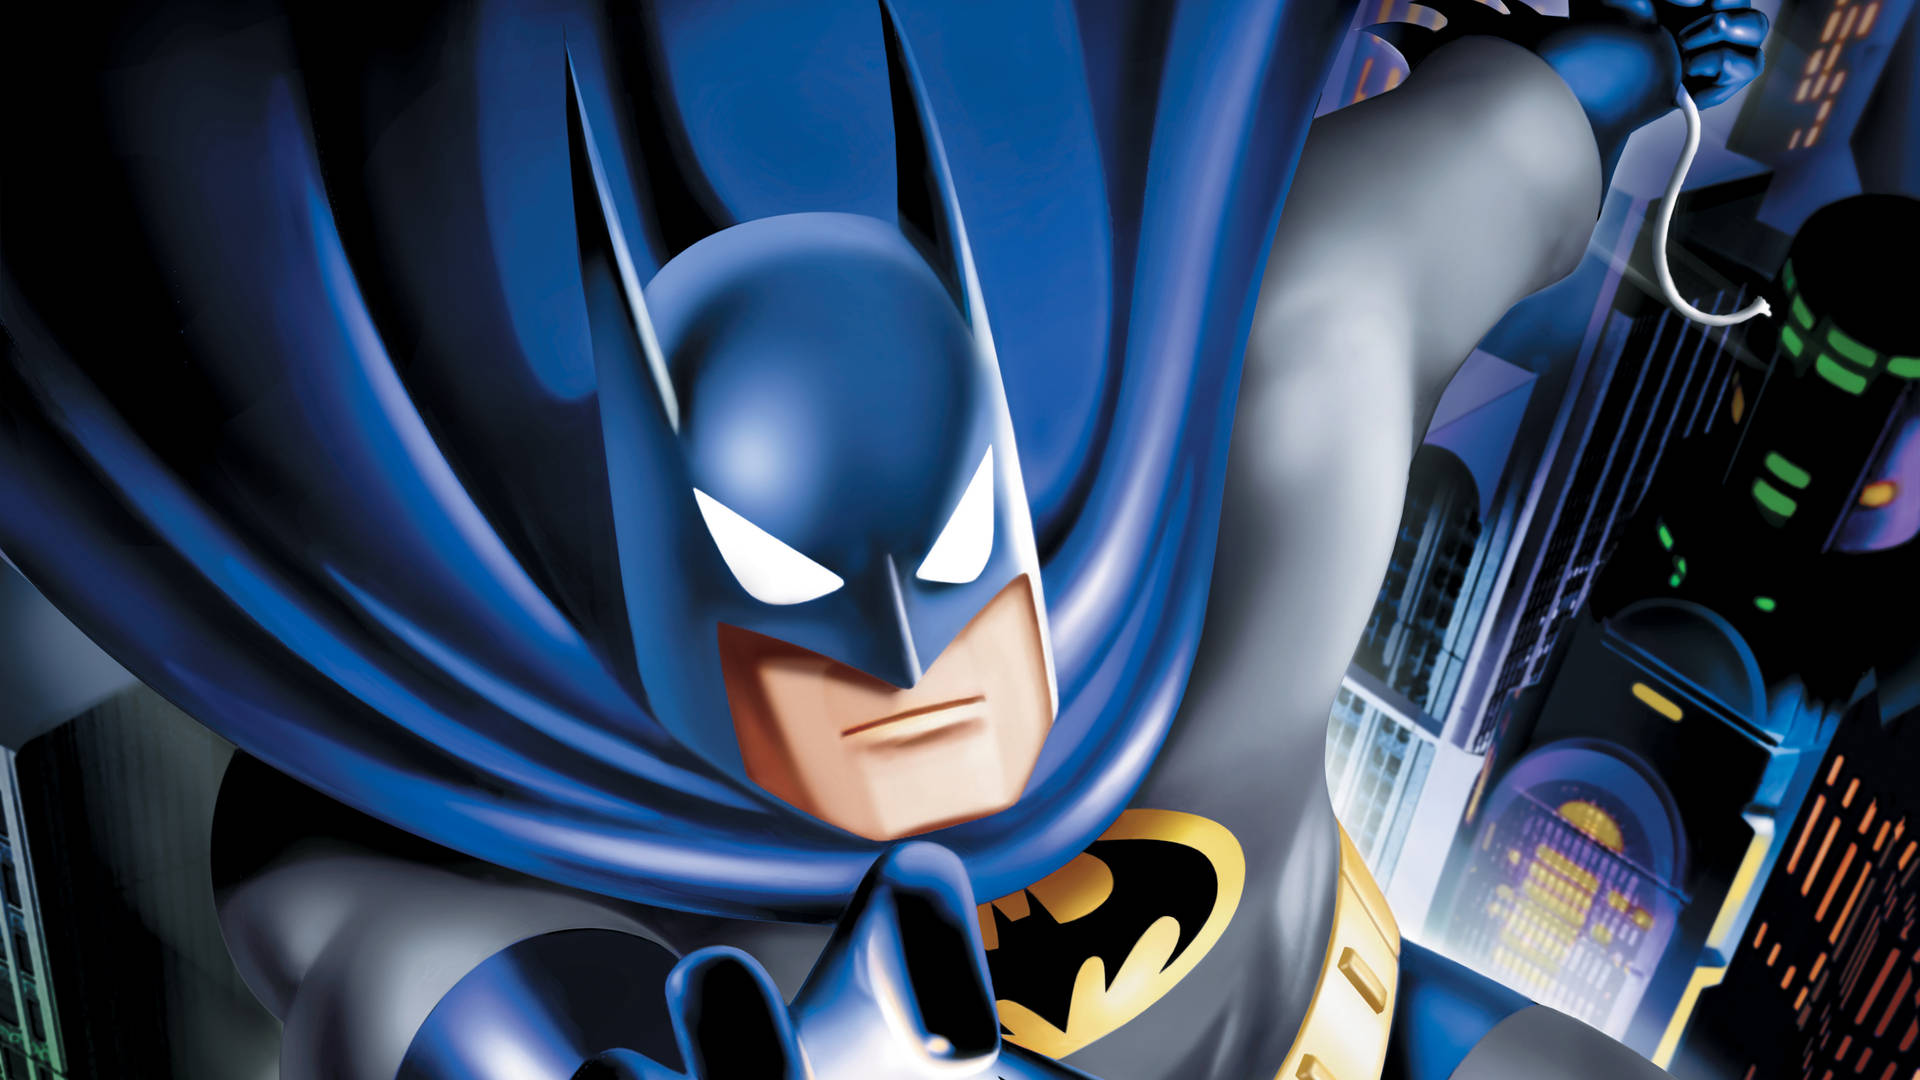 Batman Animated 3d Cartoon Desktop Wallpaper